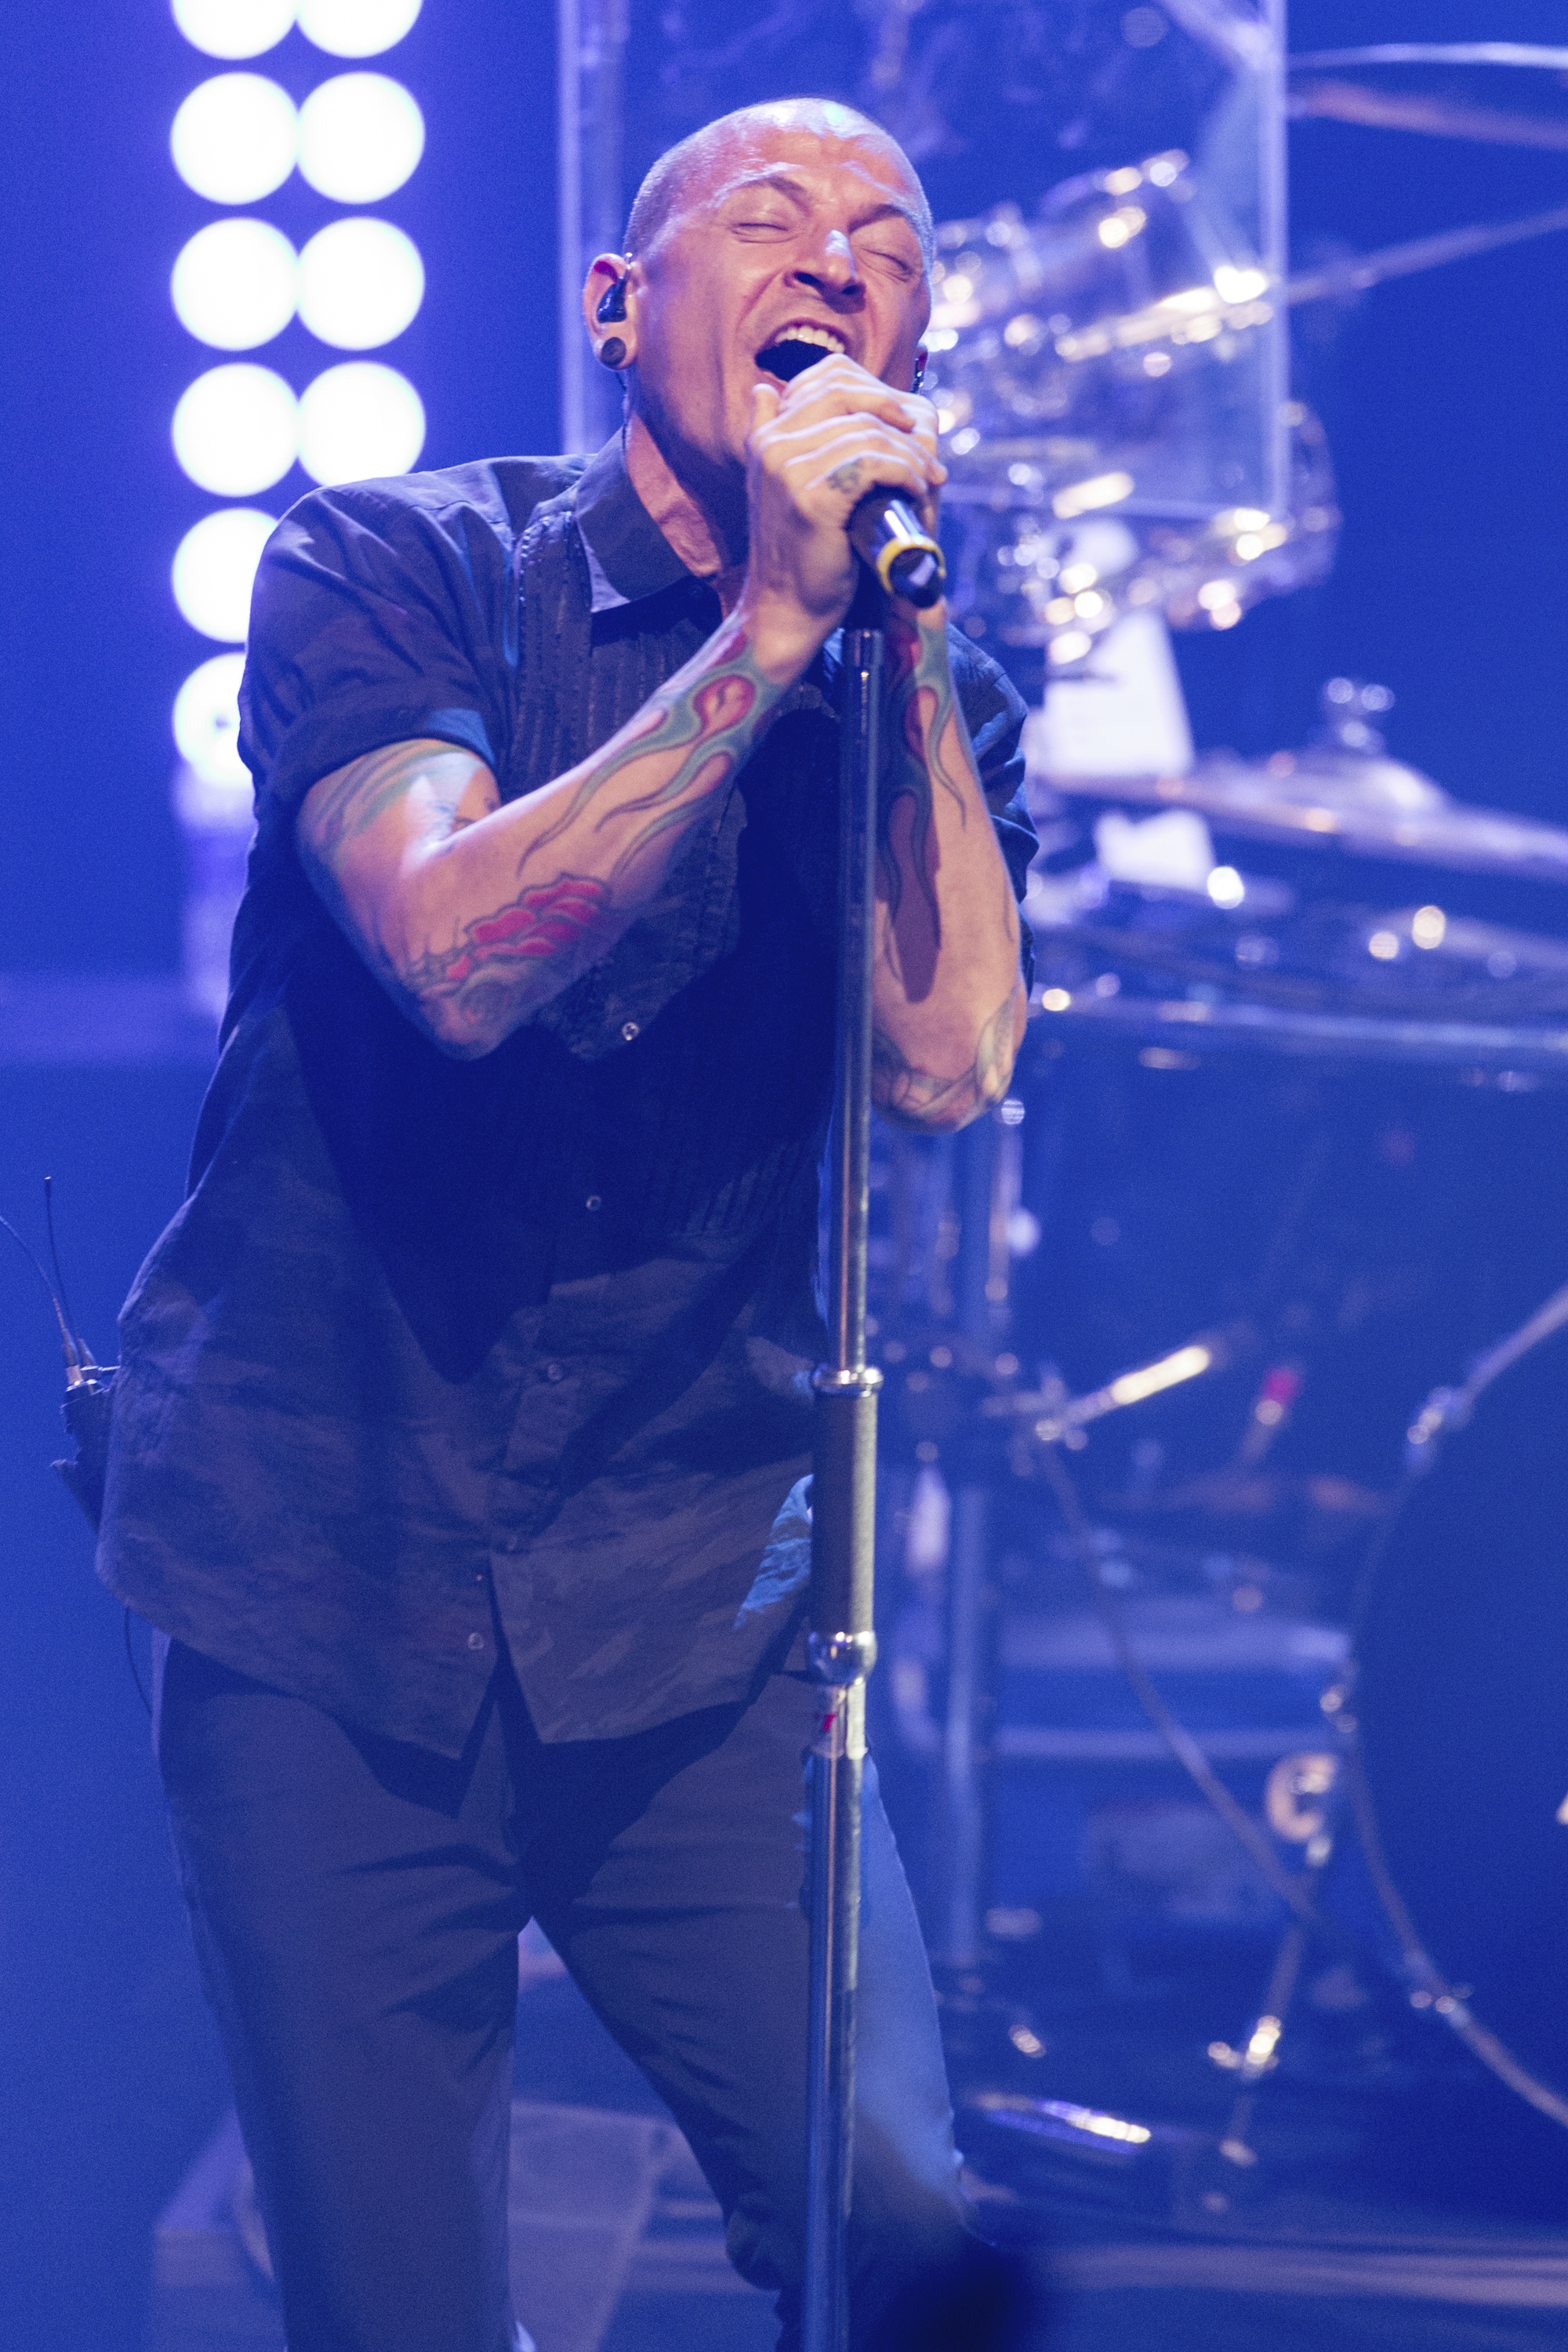 Вокалистът на Linkin Park се самоуби